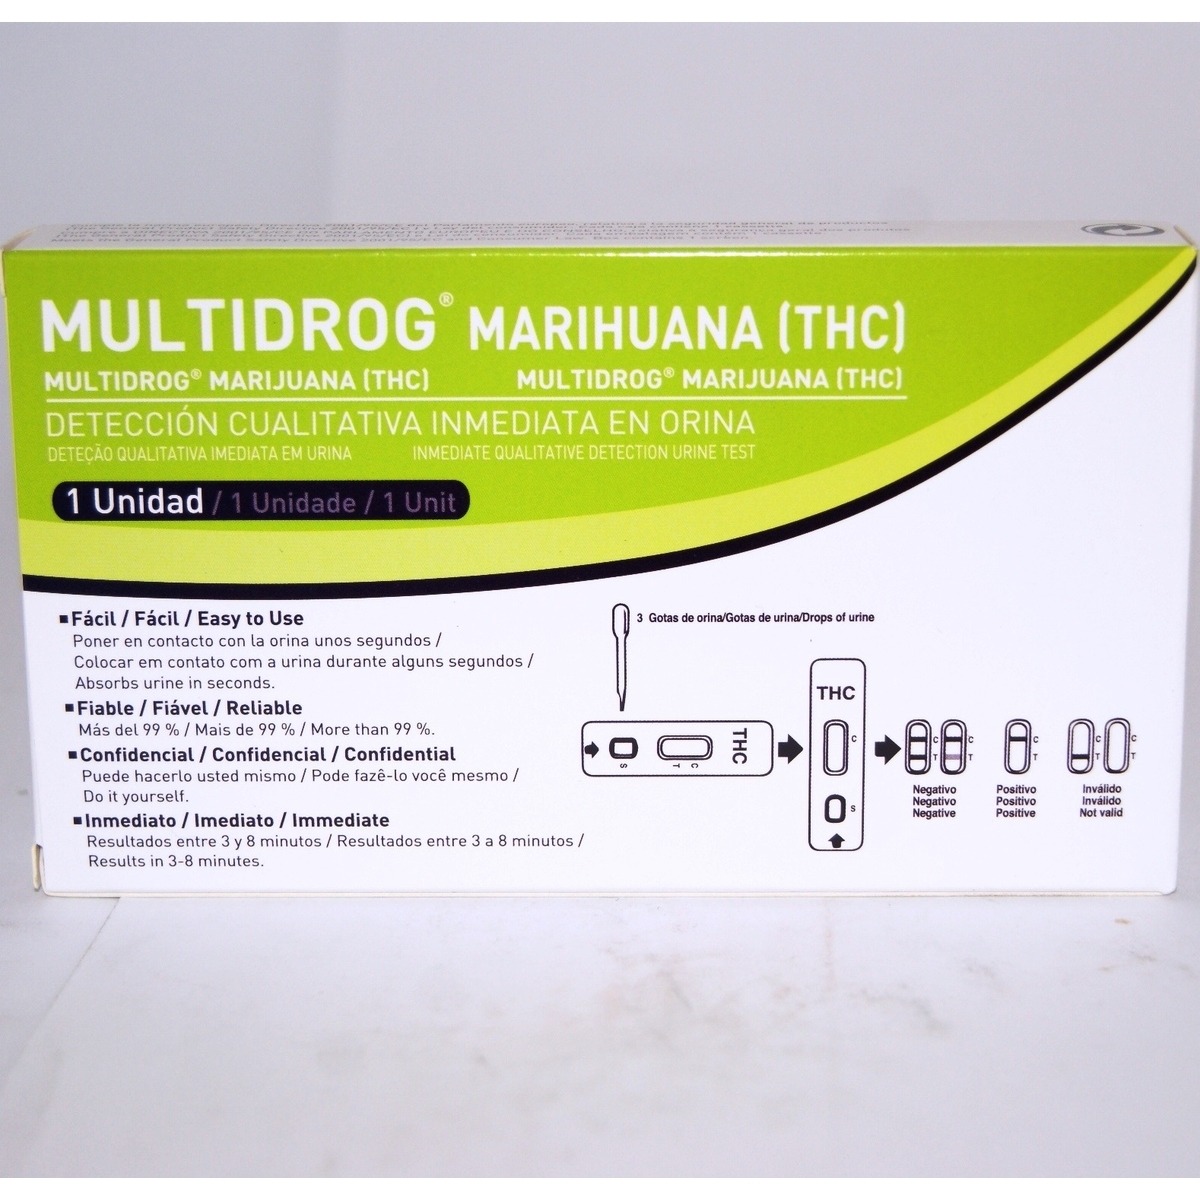 MULTIDROG TEST MARIHUANA THC 1 UNIDAD.